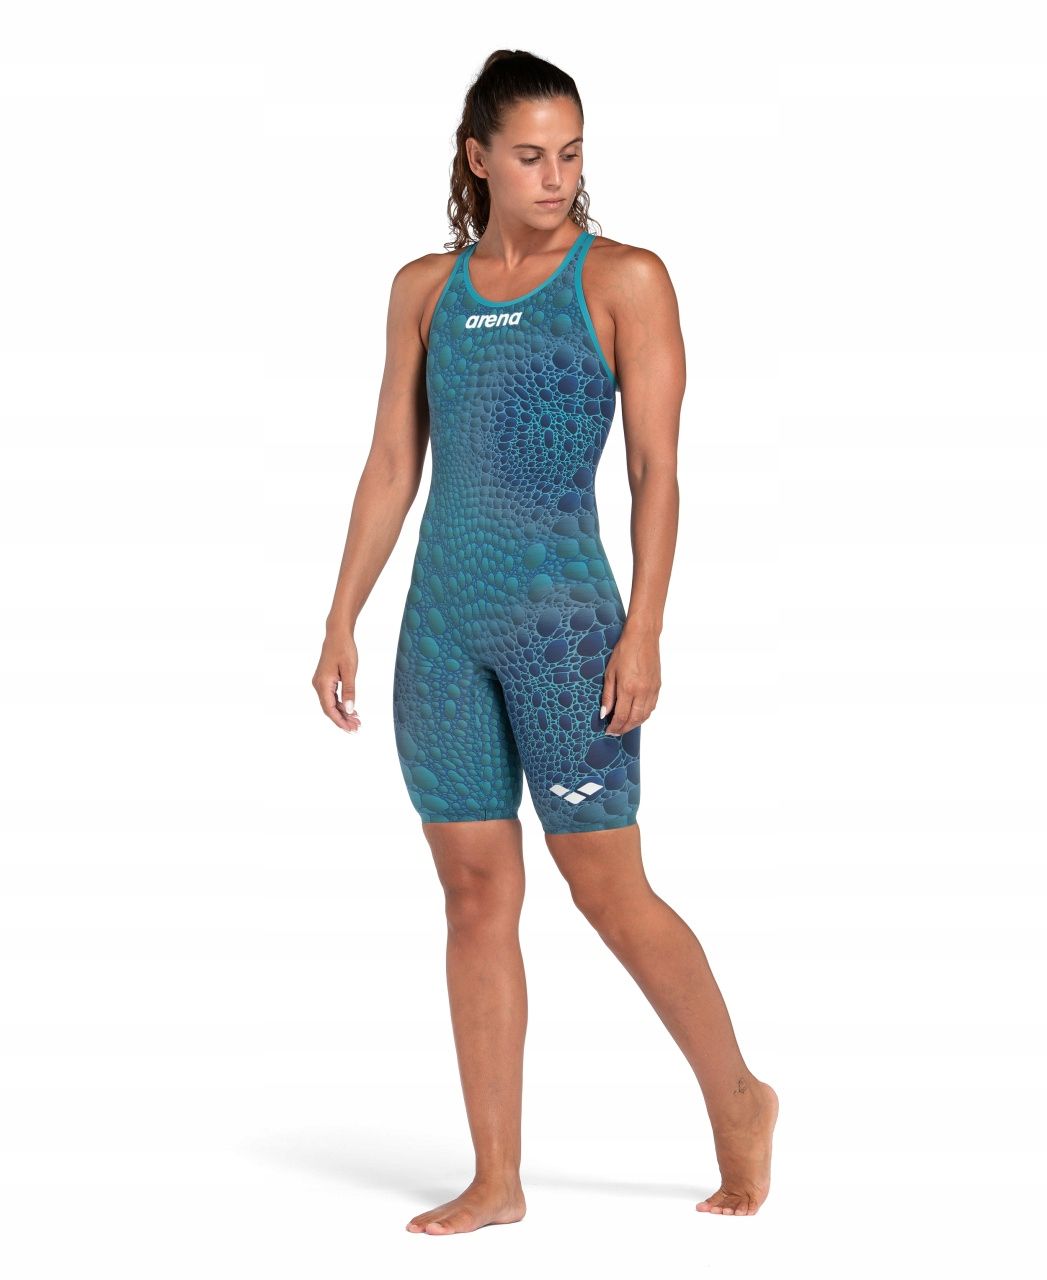 Strój startowy damski skóra pływacka Arena Carbon Air2 Abyss Cayman R.